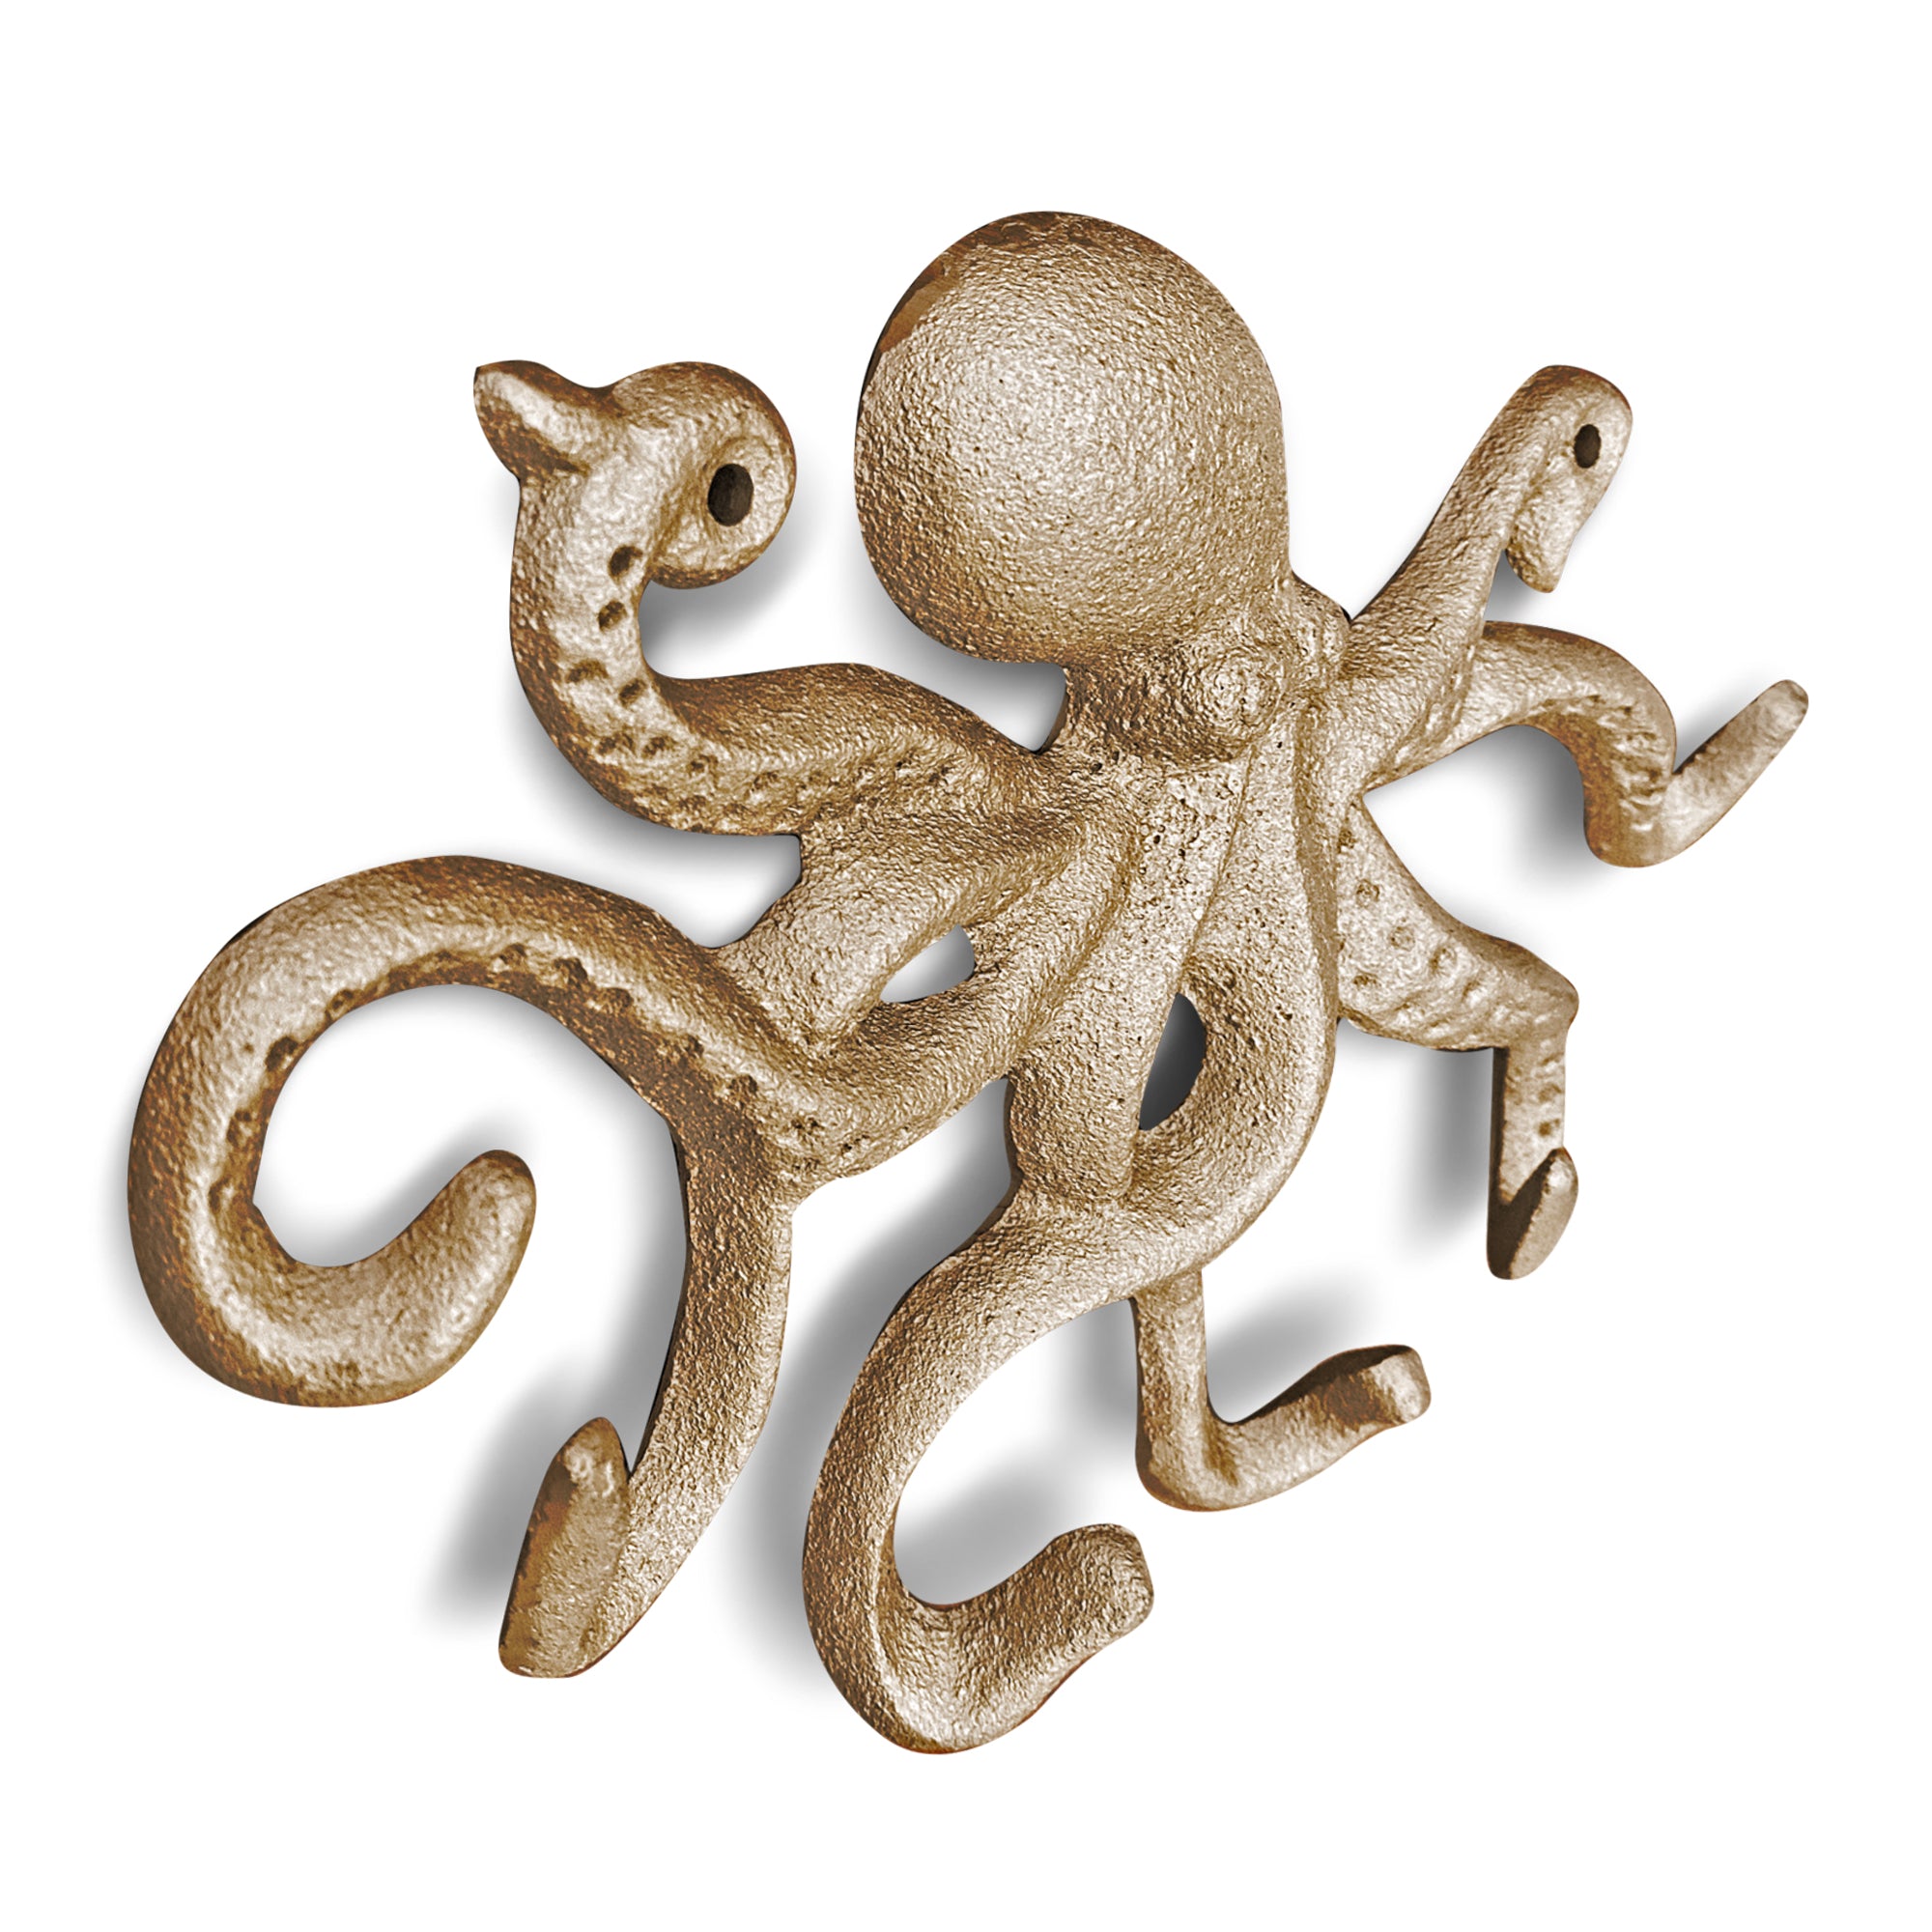  Cast Iron Octopus Hook 11 Inch - Decorative Hook